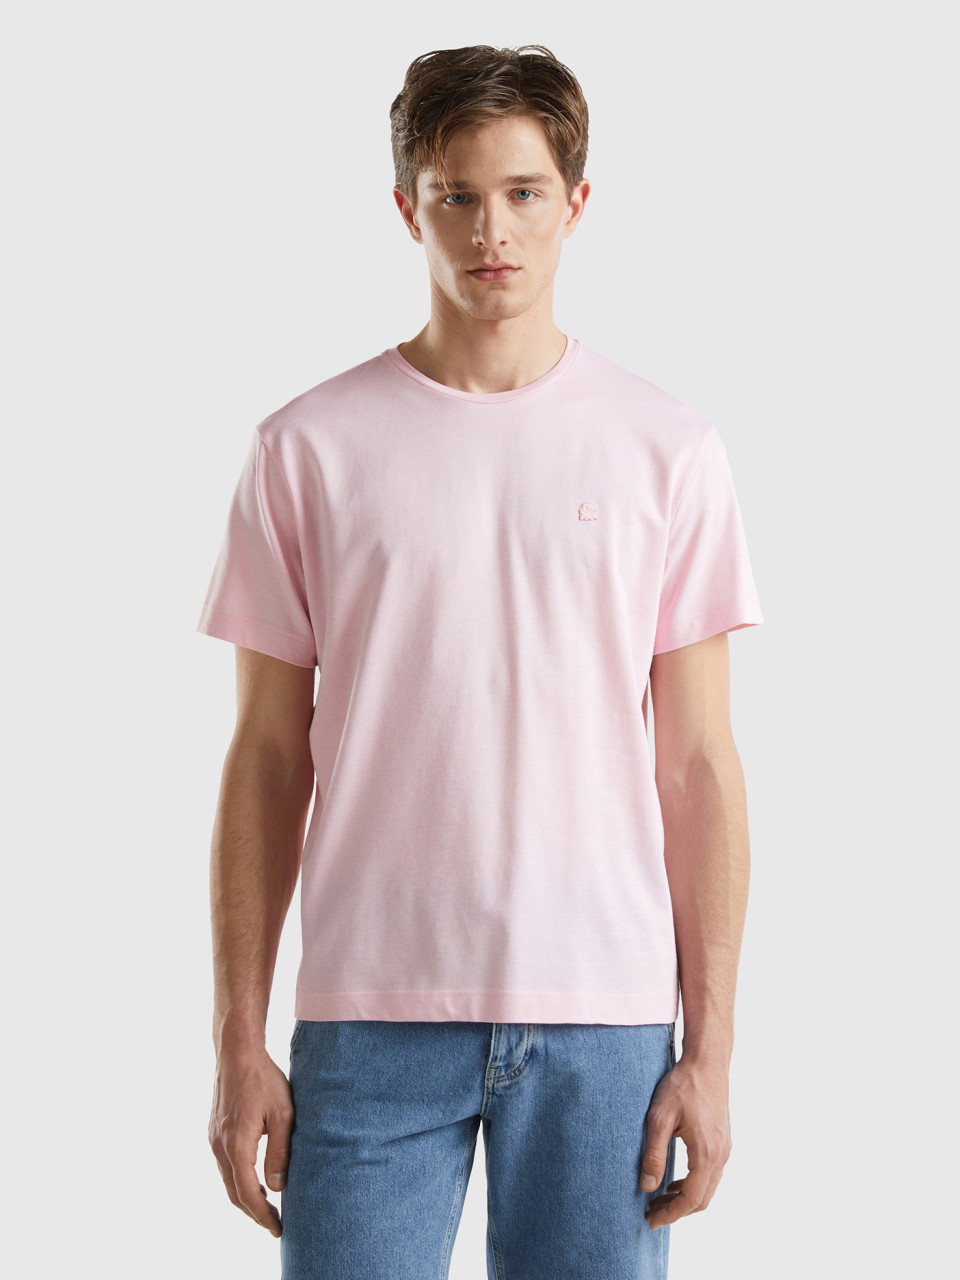 Benetton, Mikro-piqué-shirt, Pink, male